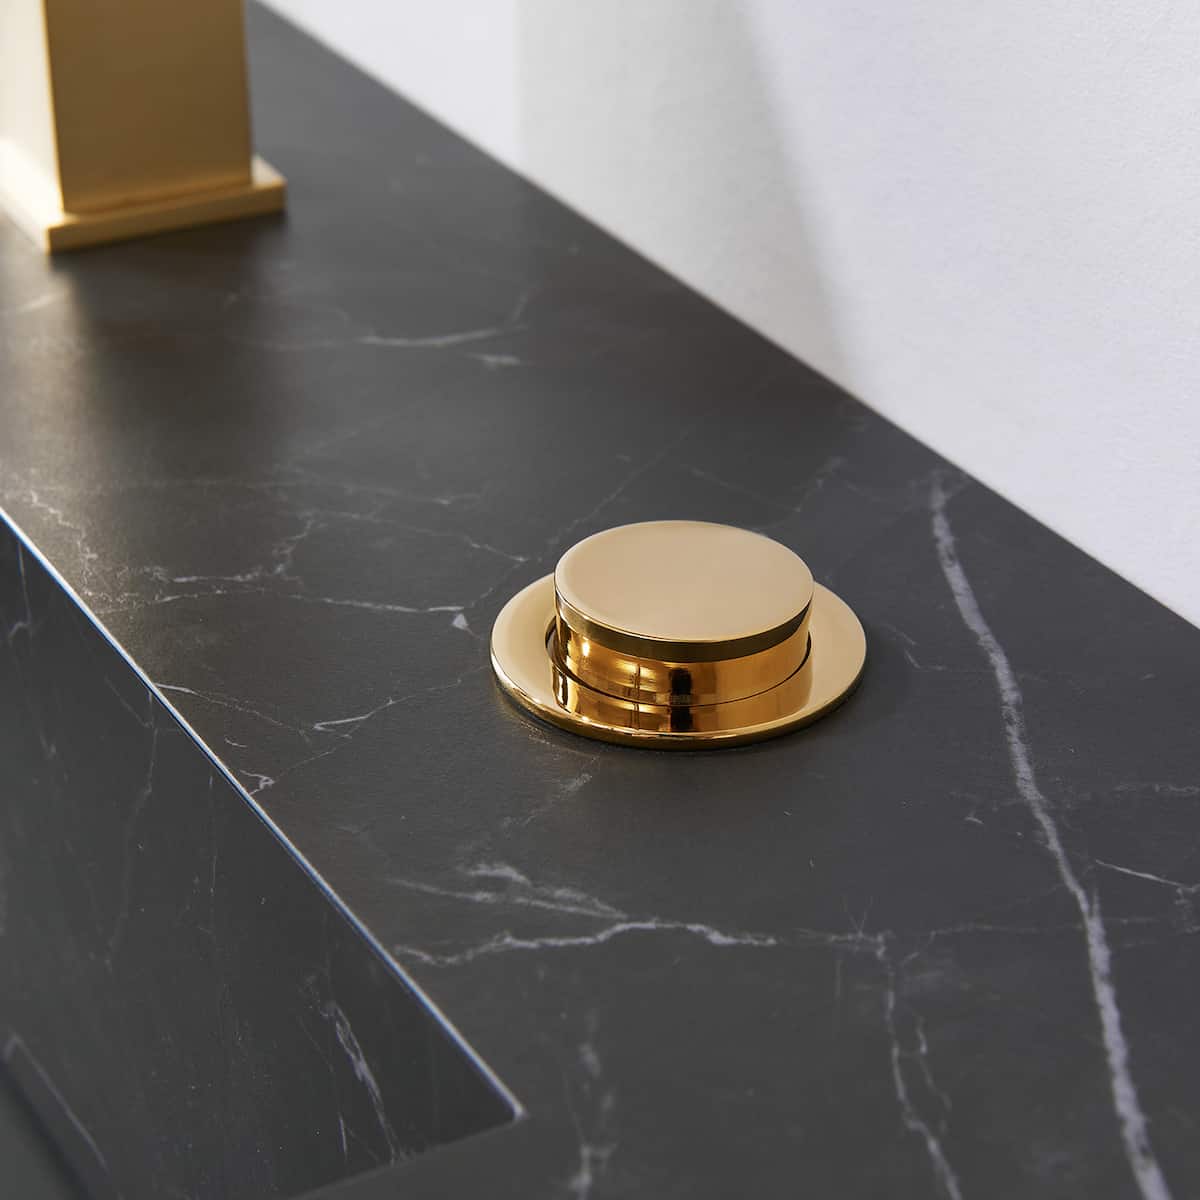 Vinnova Segovia Freestanding Single Sink Bath Vanity in Suleiman Oak with Black Sintered Stone Top 7020-SO-SL